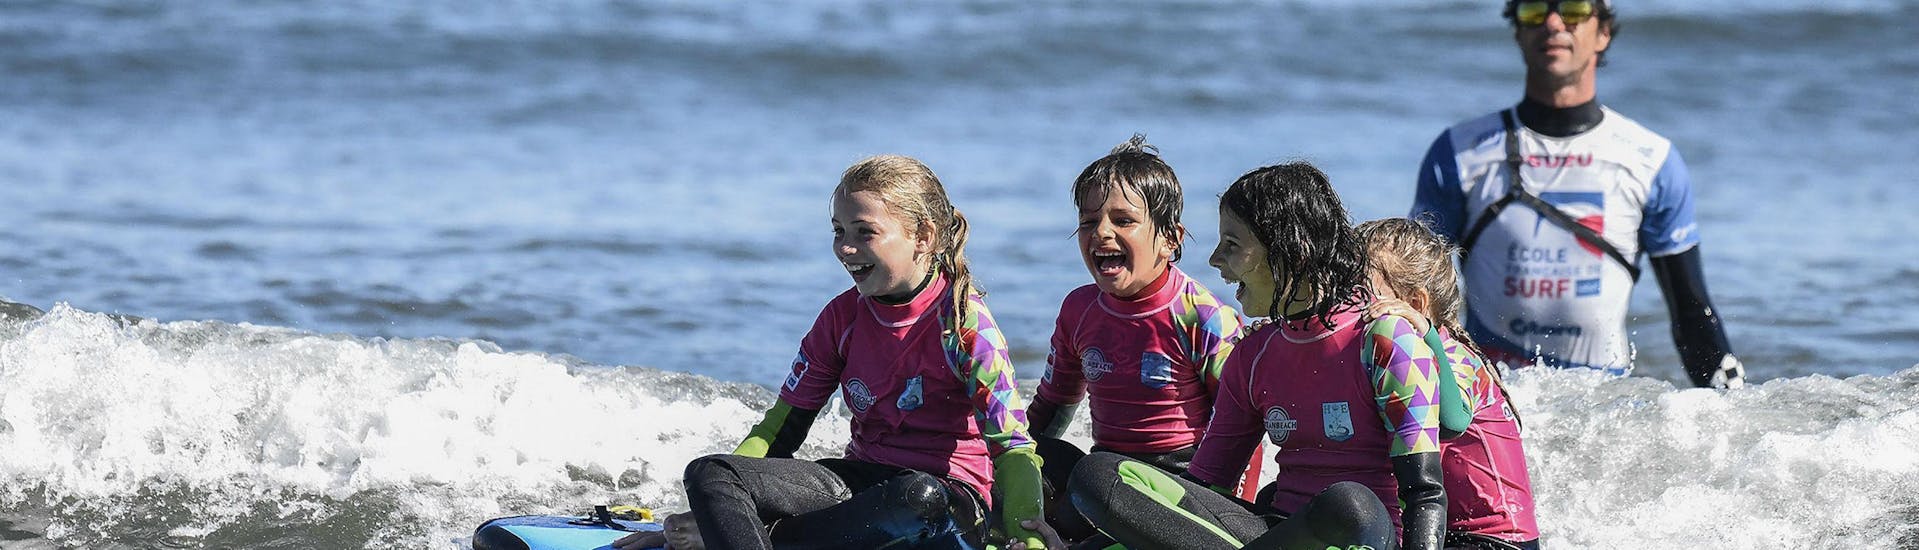 Lezioni private di surf a Hendaye da 5 anni per tutti i livelli.